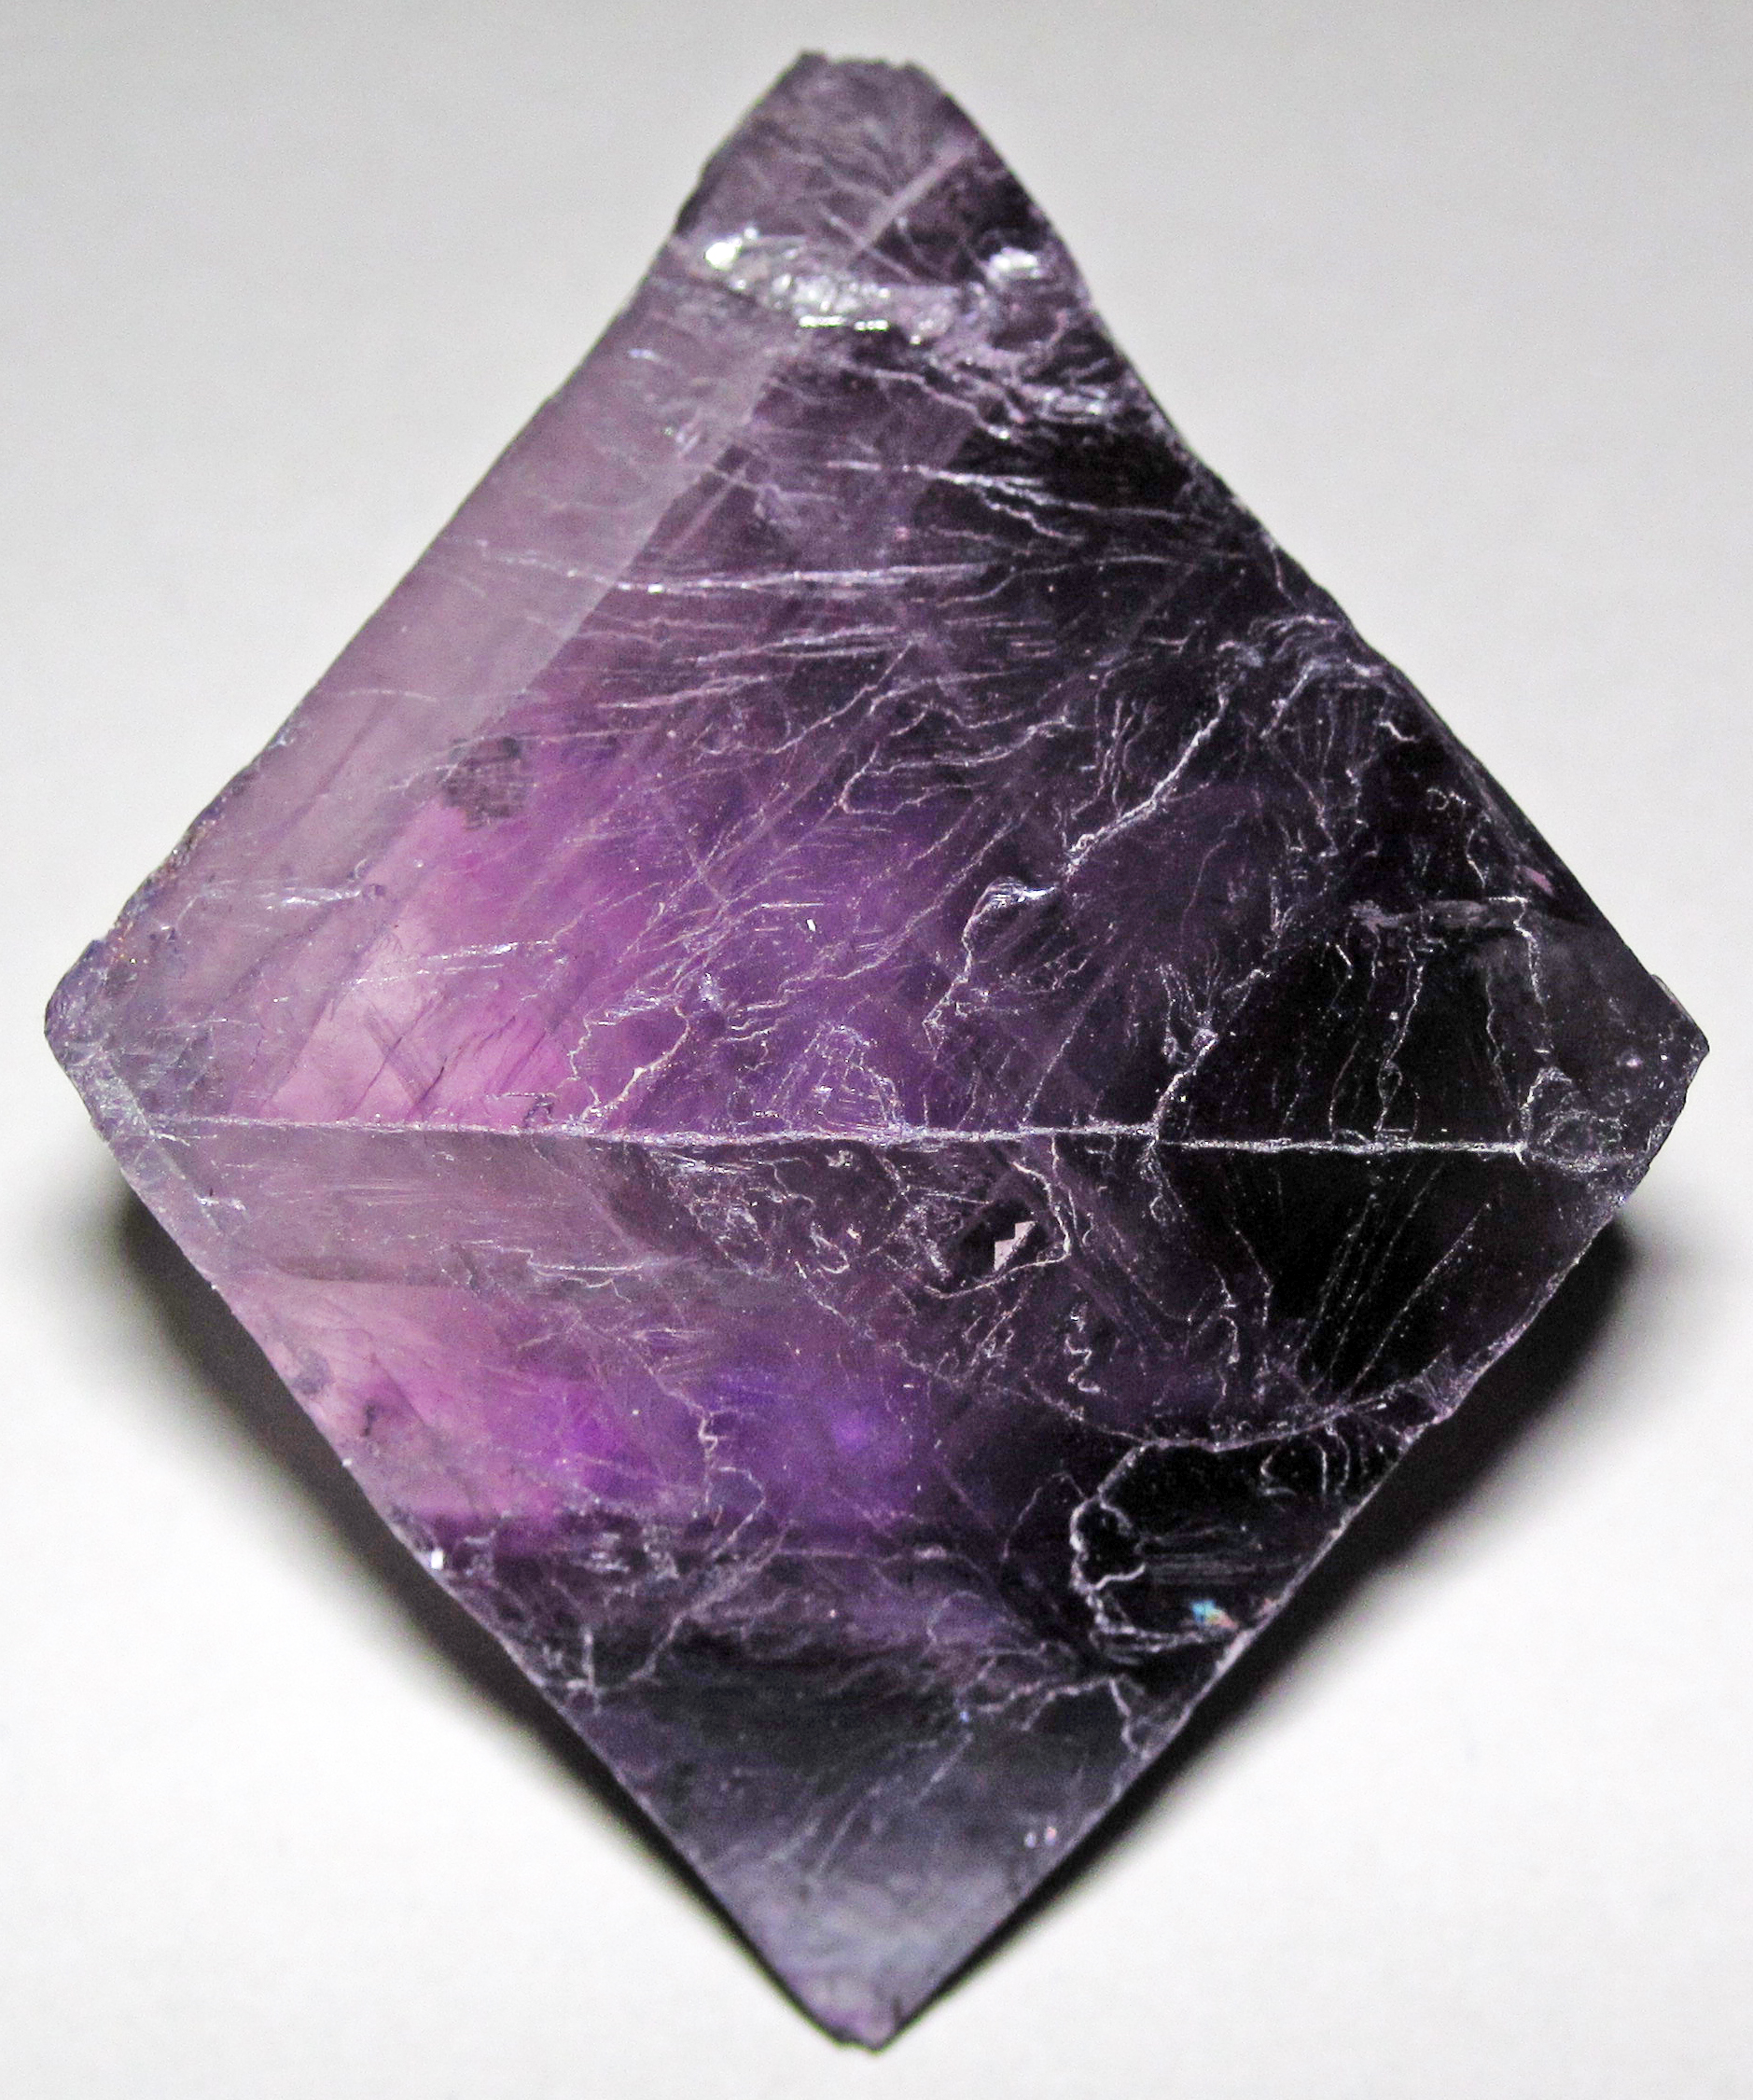 A fluorite crystal